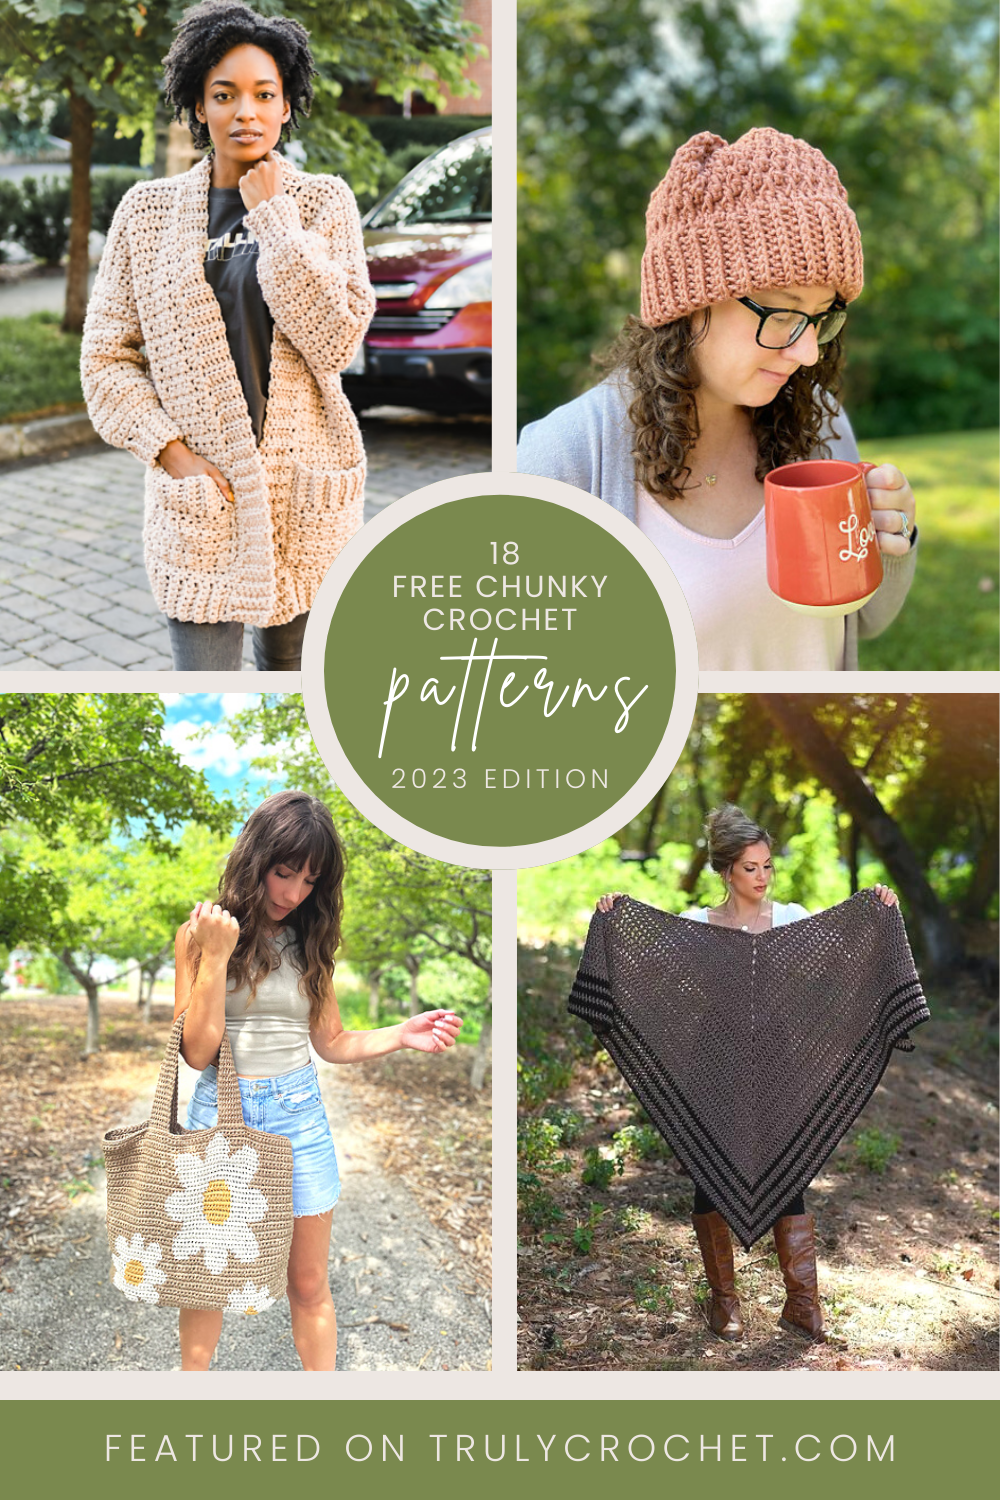 18 Free Chunky Crochet Patterns - 2023 Edition